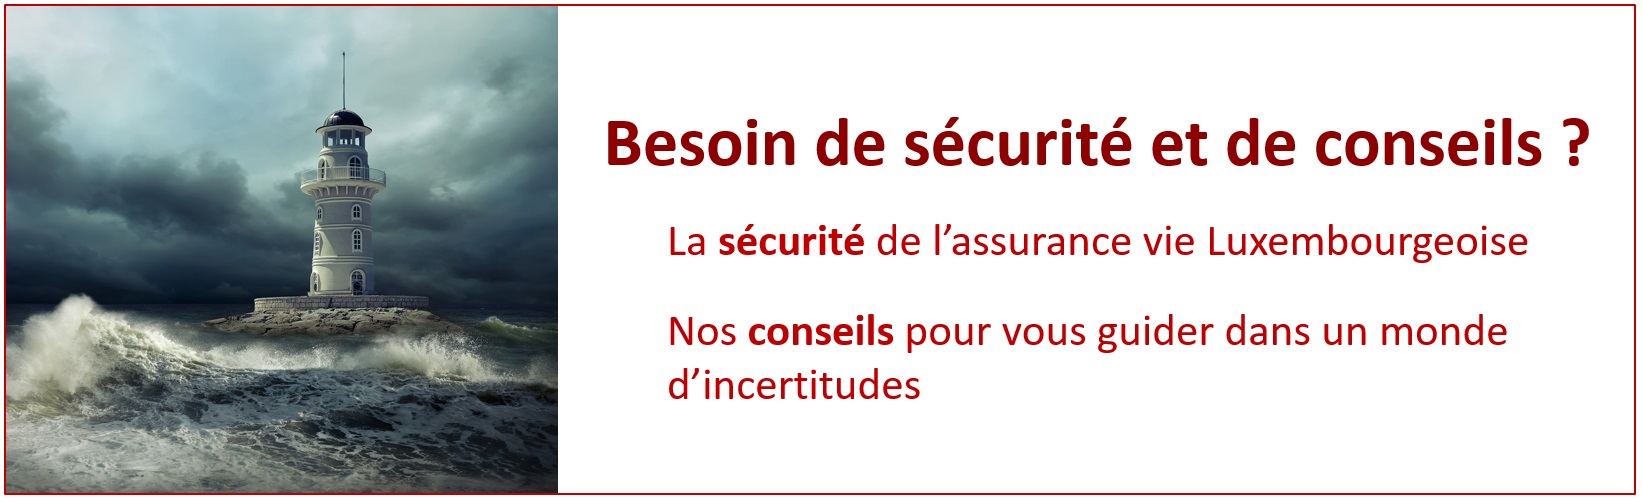 assurance vie luxembourg - securite - conseil